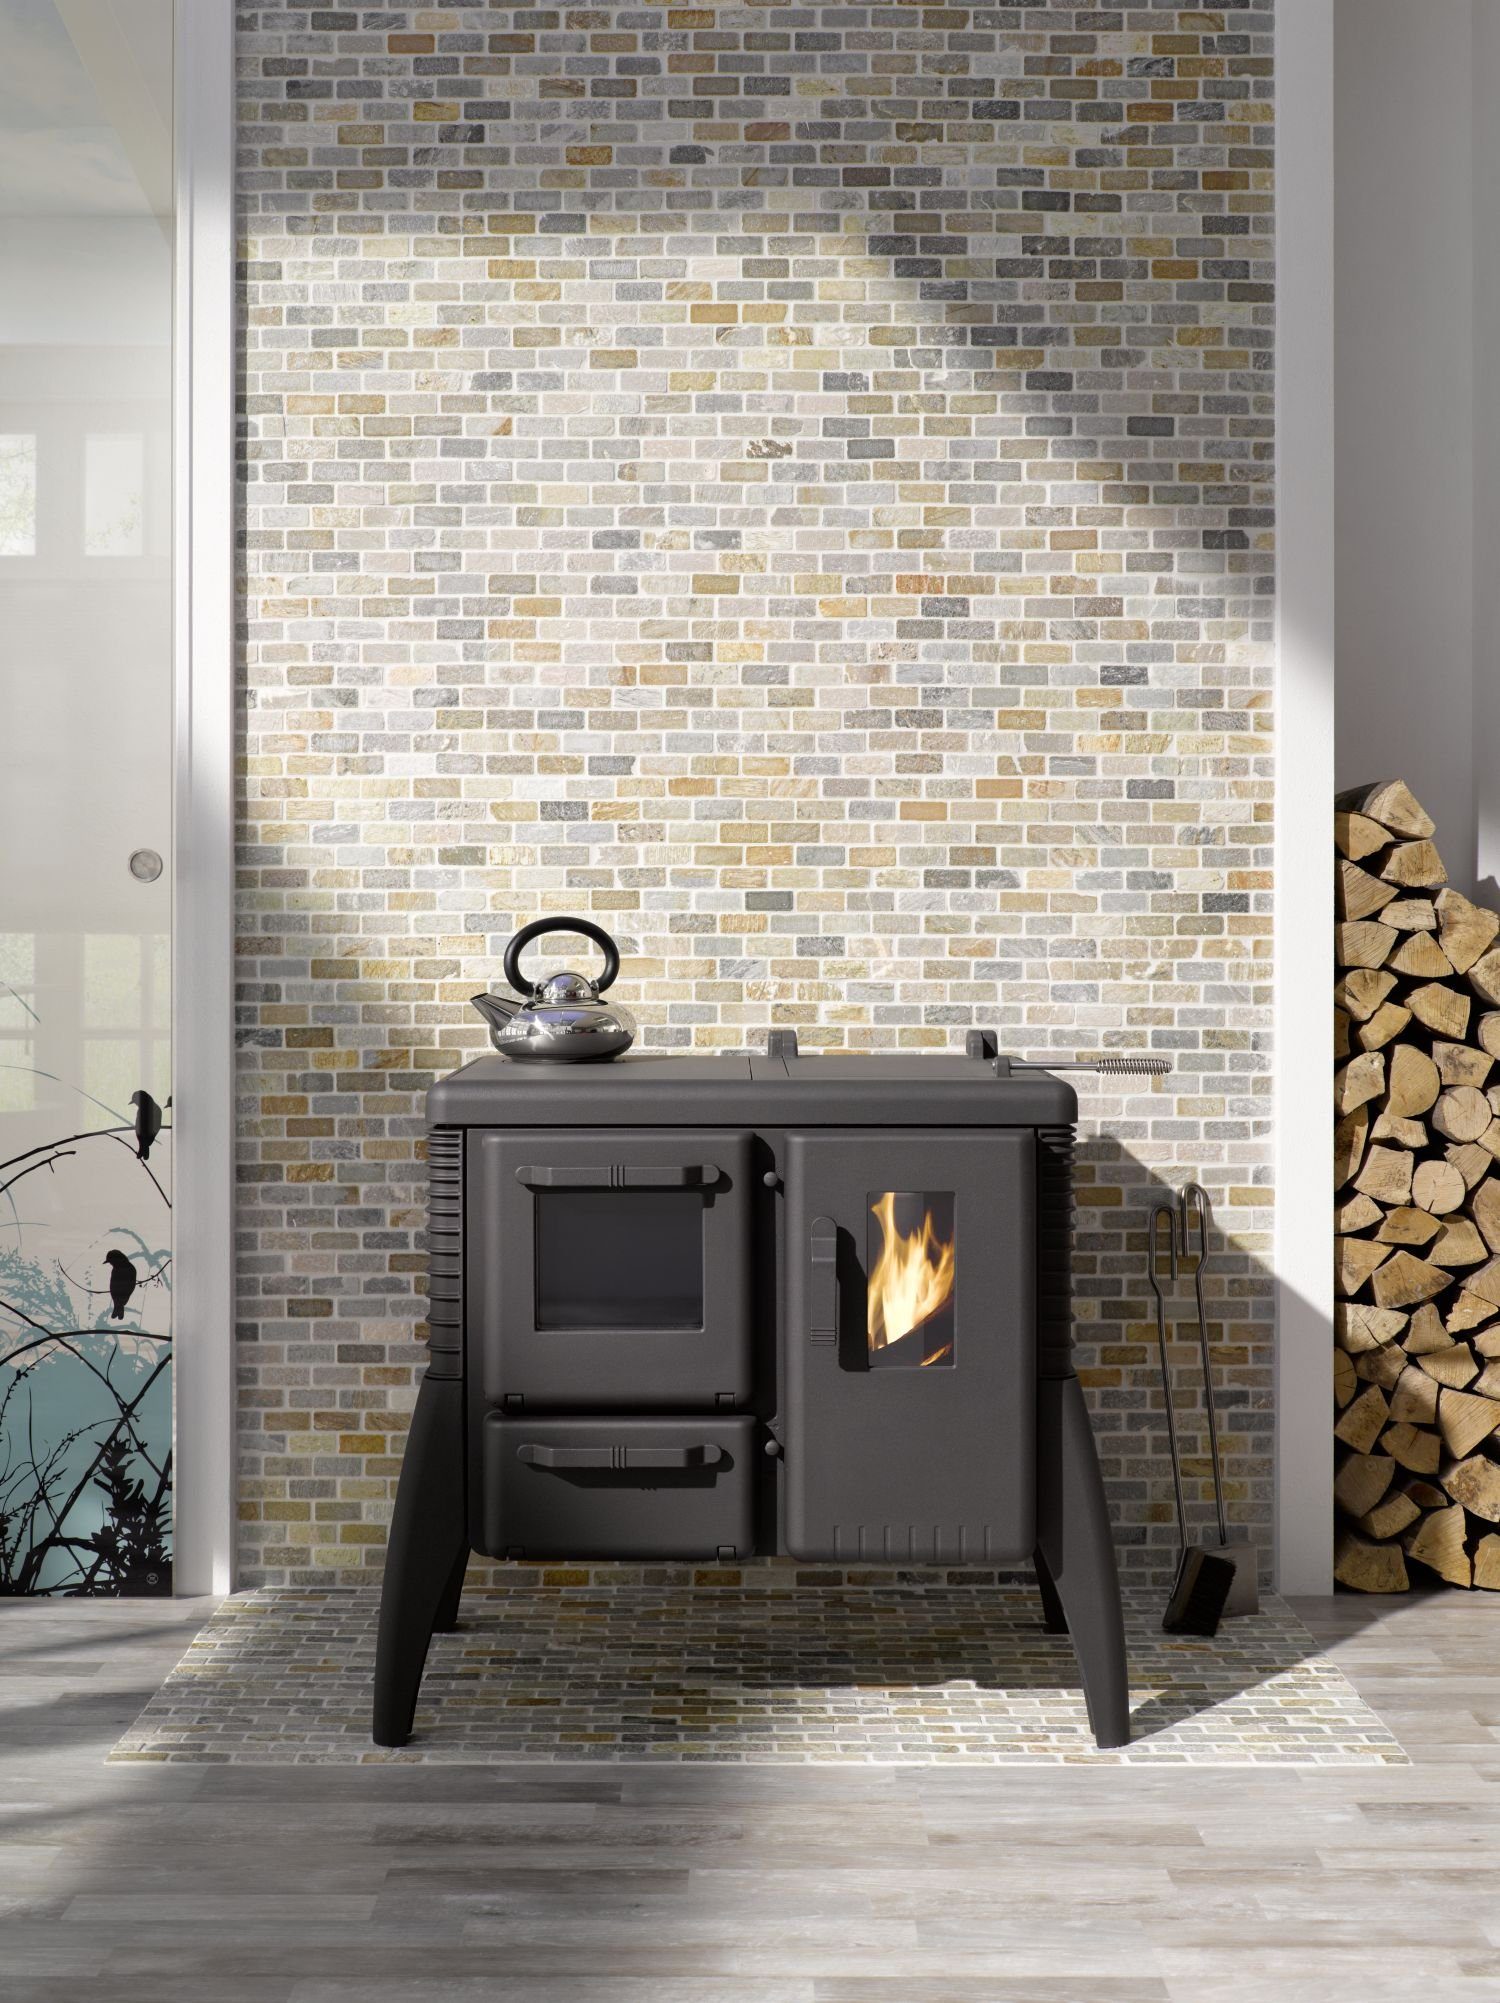 grau Brick Boden Mosaikfliesen Mosani Dusche Fliese Mosaik beige Naturstein Quarzit Wand